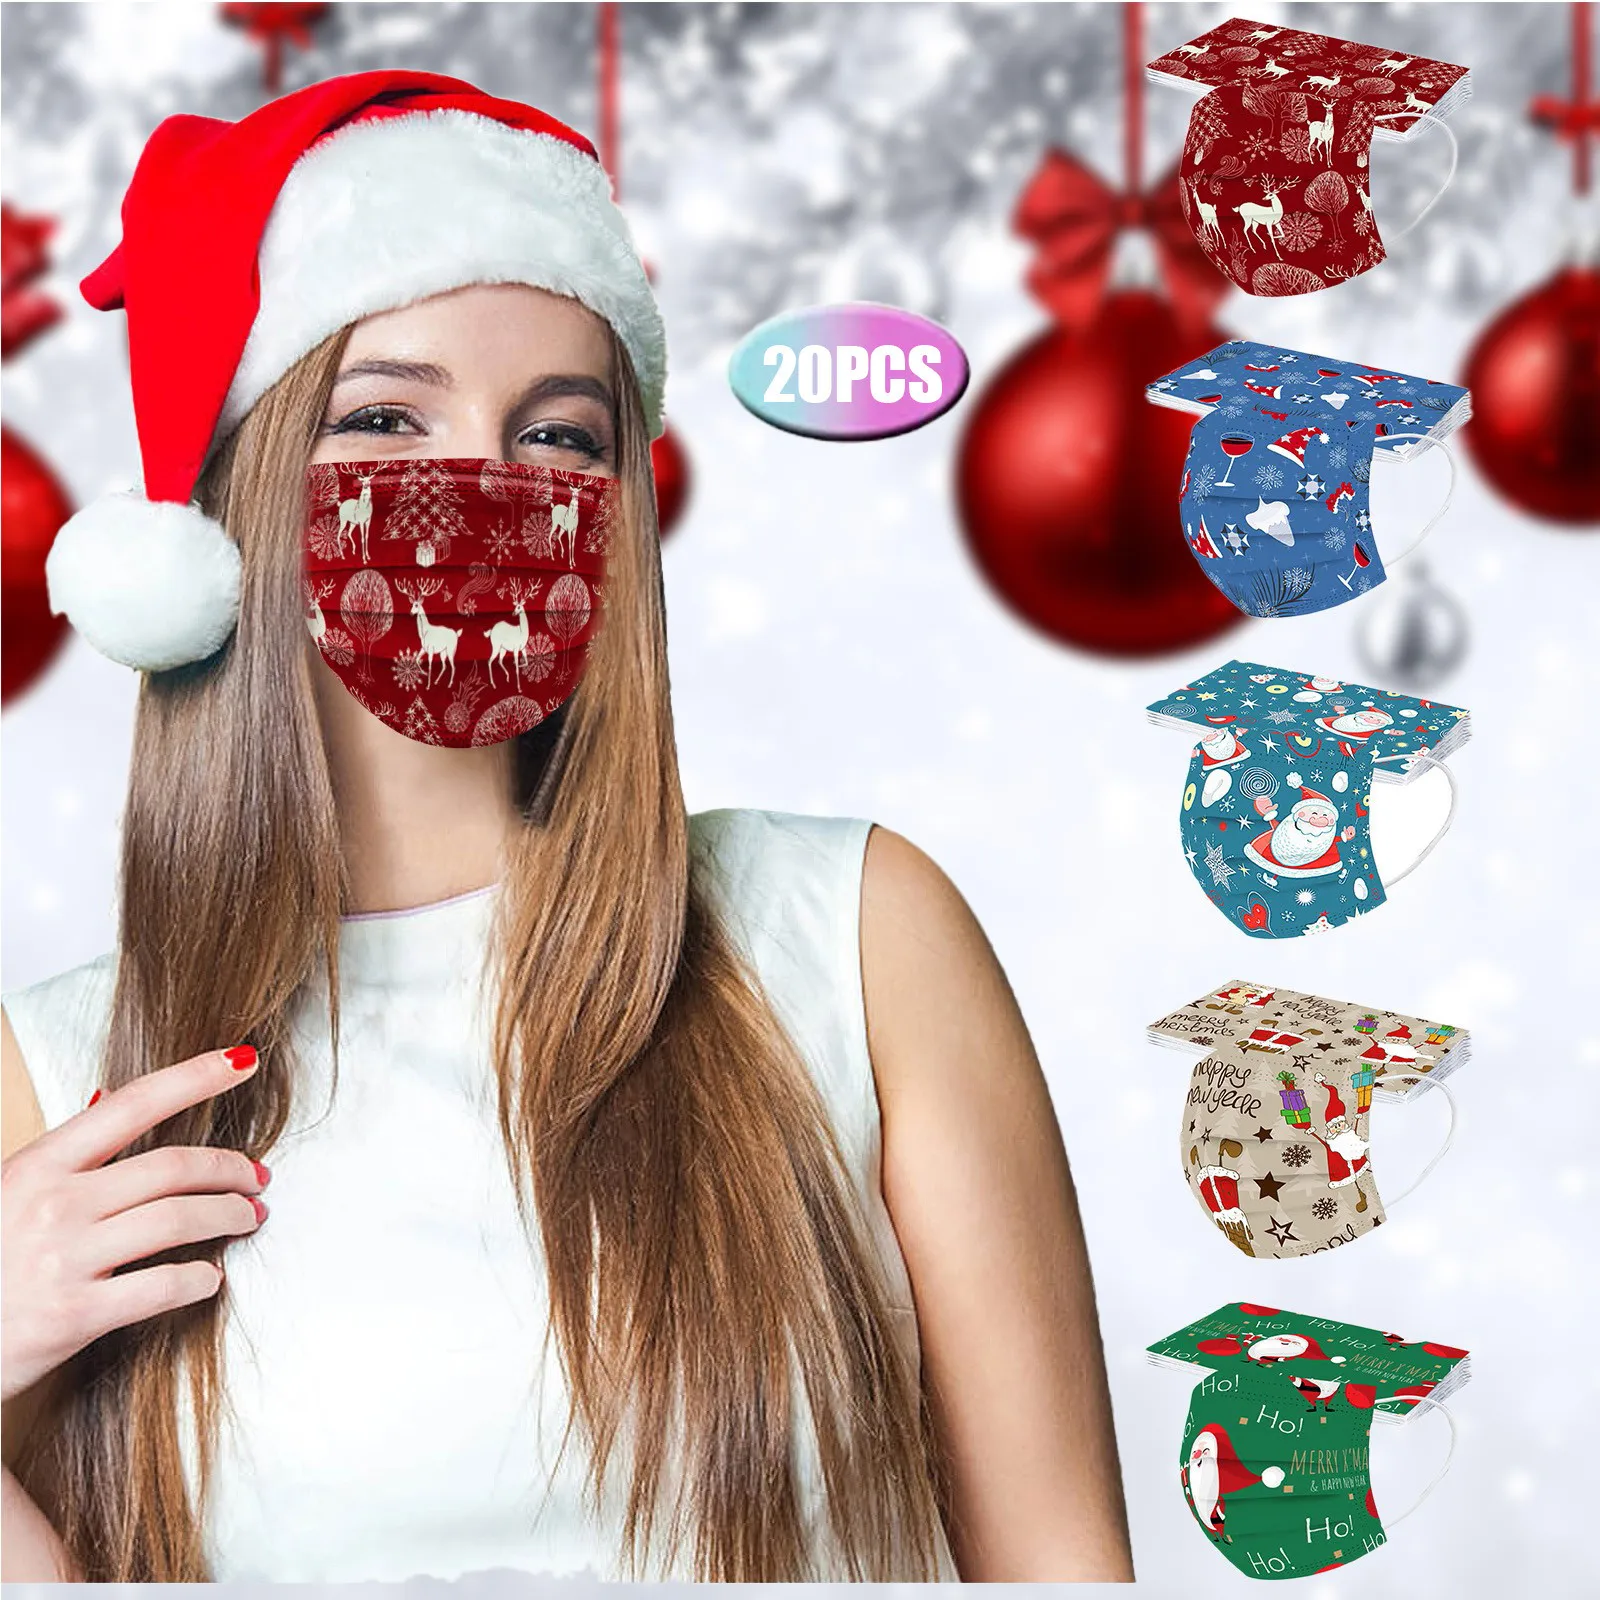 

20pcs Unisex Christmas Masks Disposable Face Mask 3ply Loop Mouth Cover Mask Fashion Decoration Gift Bandana 10/20/50pcs